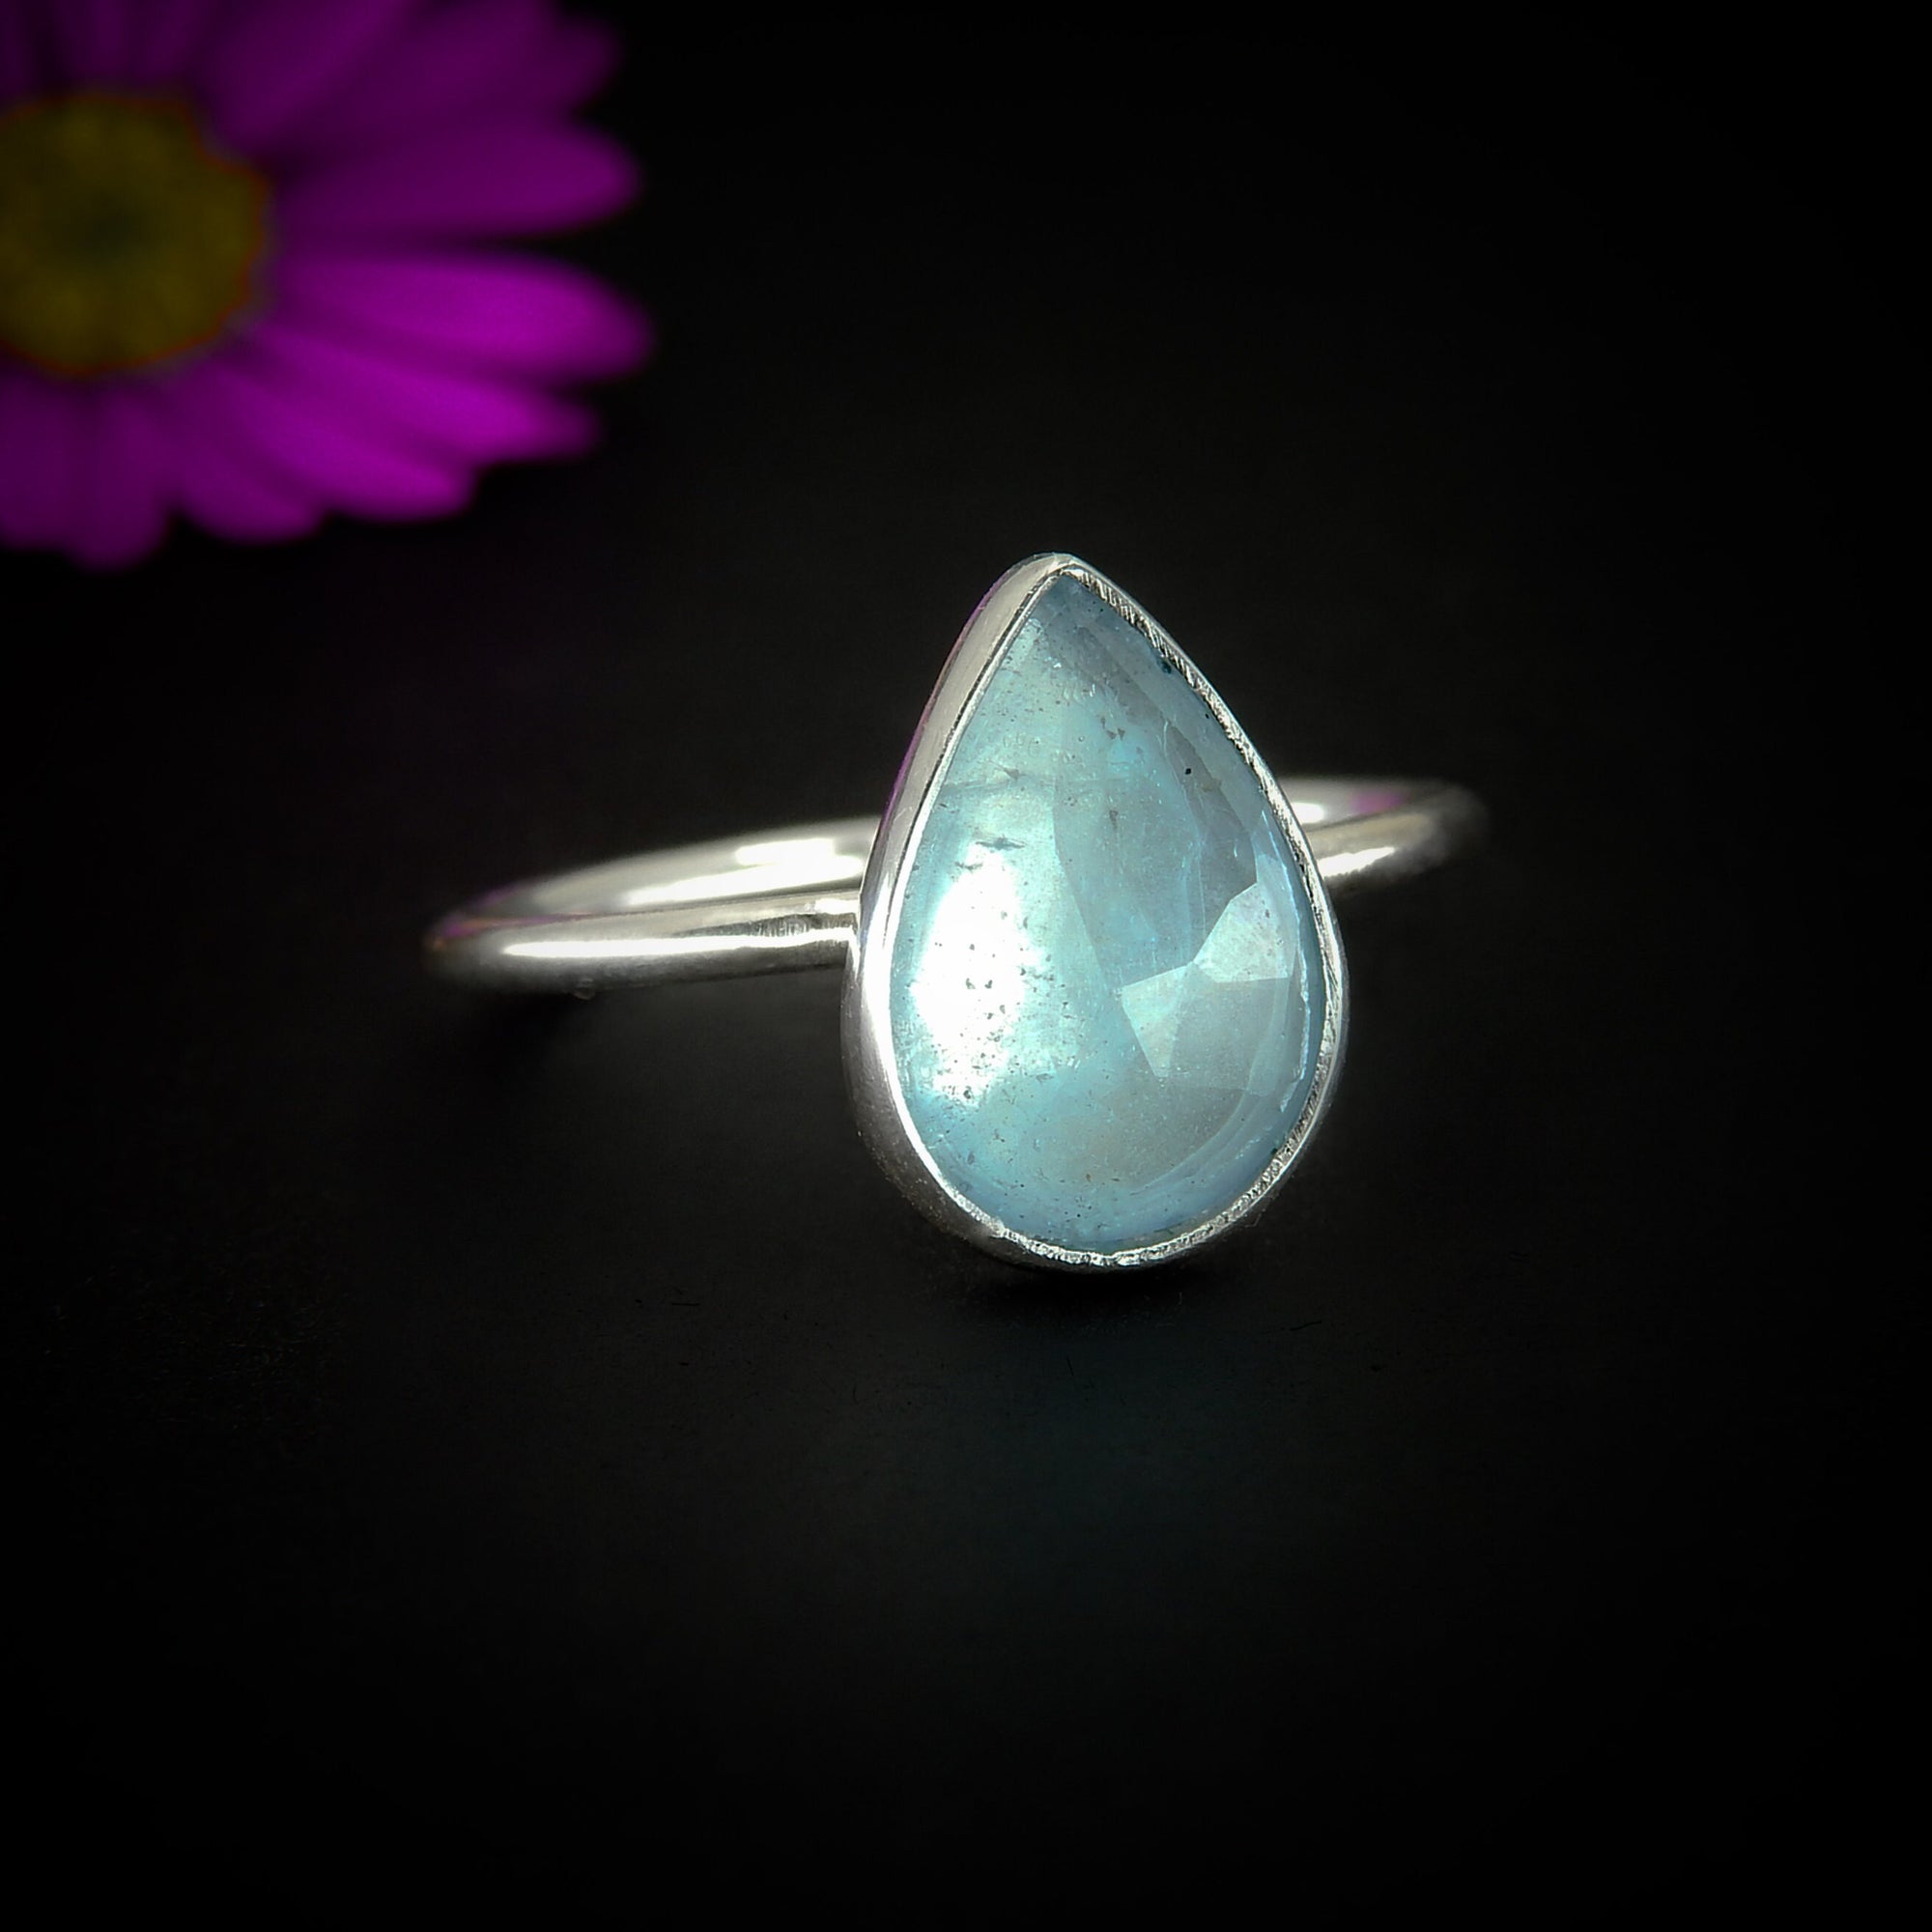 Rose Cut Aquamarine Ring - Size 9 1/4 - Sterling Silver - Aquamarine Jewellery - Blue Aquamarine Ring - Dainty Faceted Aquamarine Ring OOAK